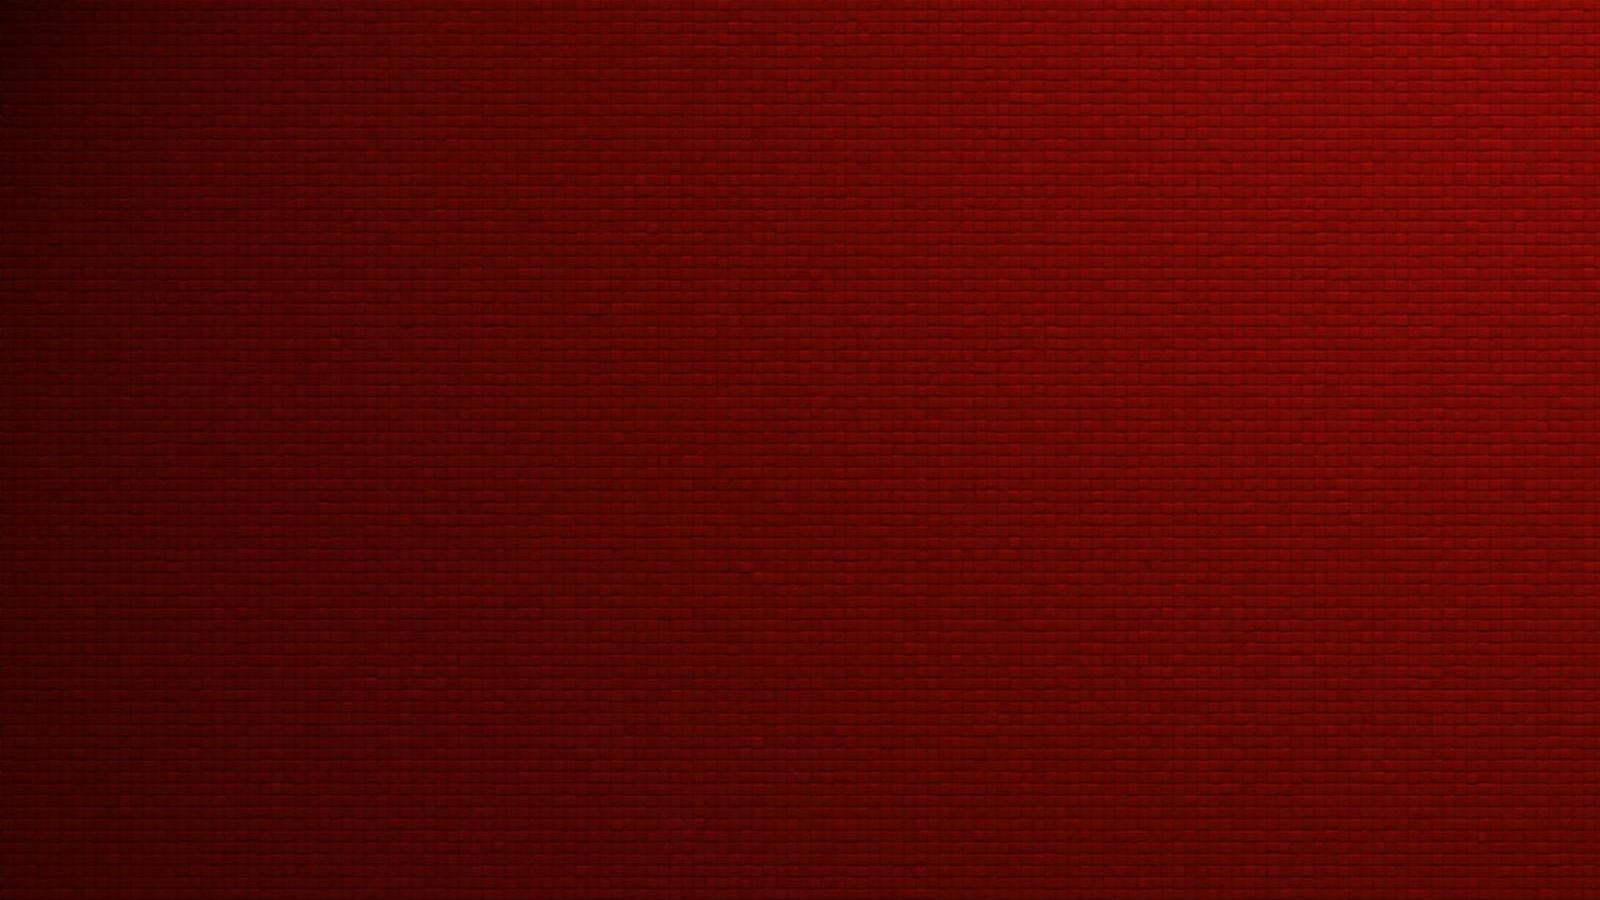 Red Desktop Wallpaper. Abstract Red Wallpaper